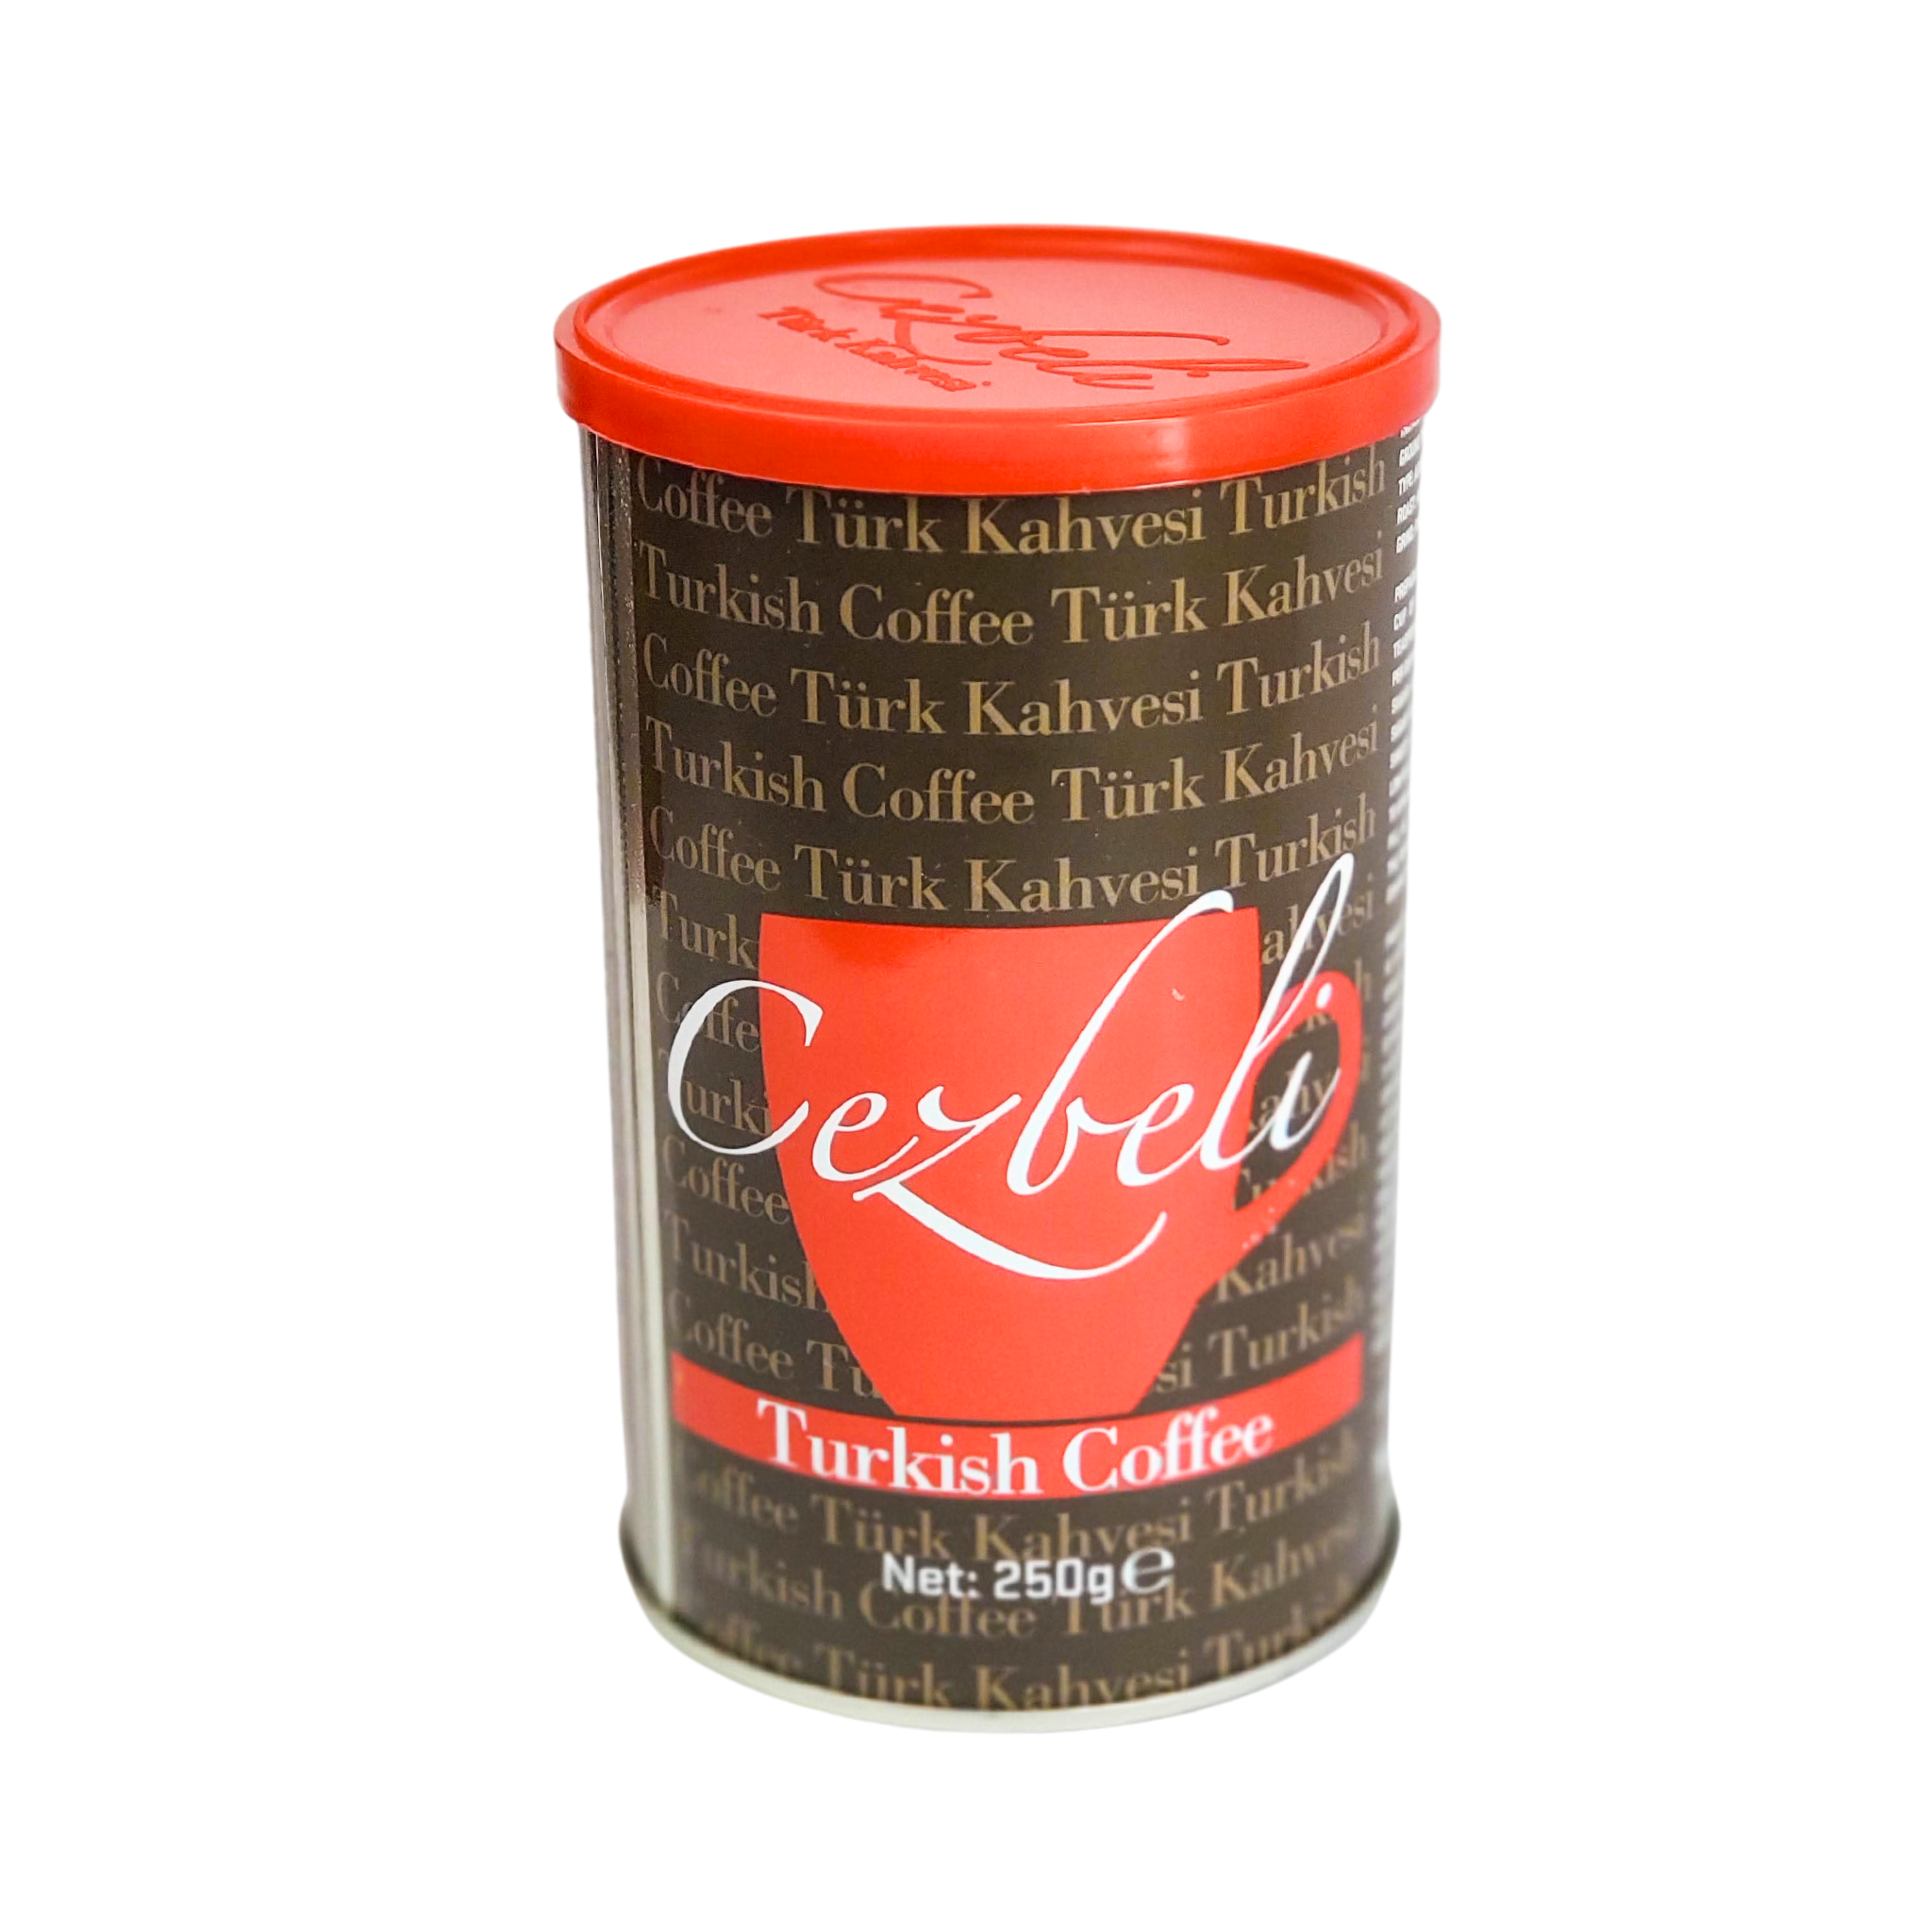 Cezbeli Turk Kahvesi Turkish Coffee 250g